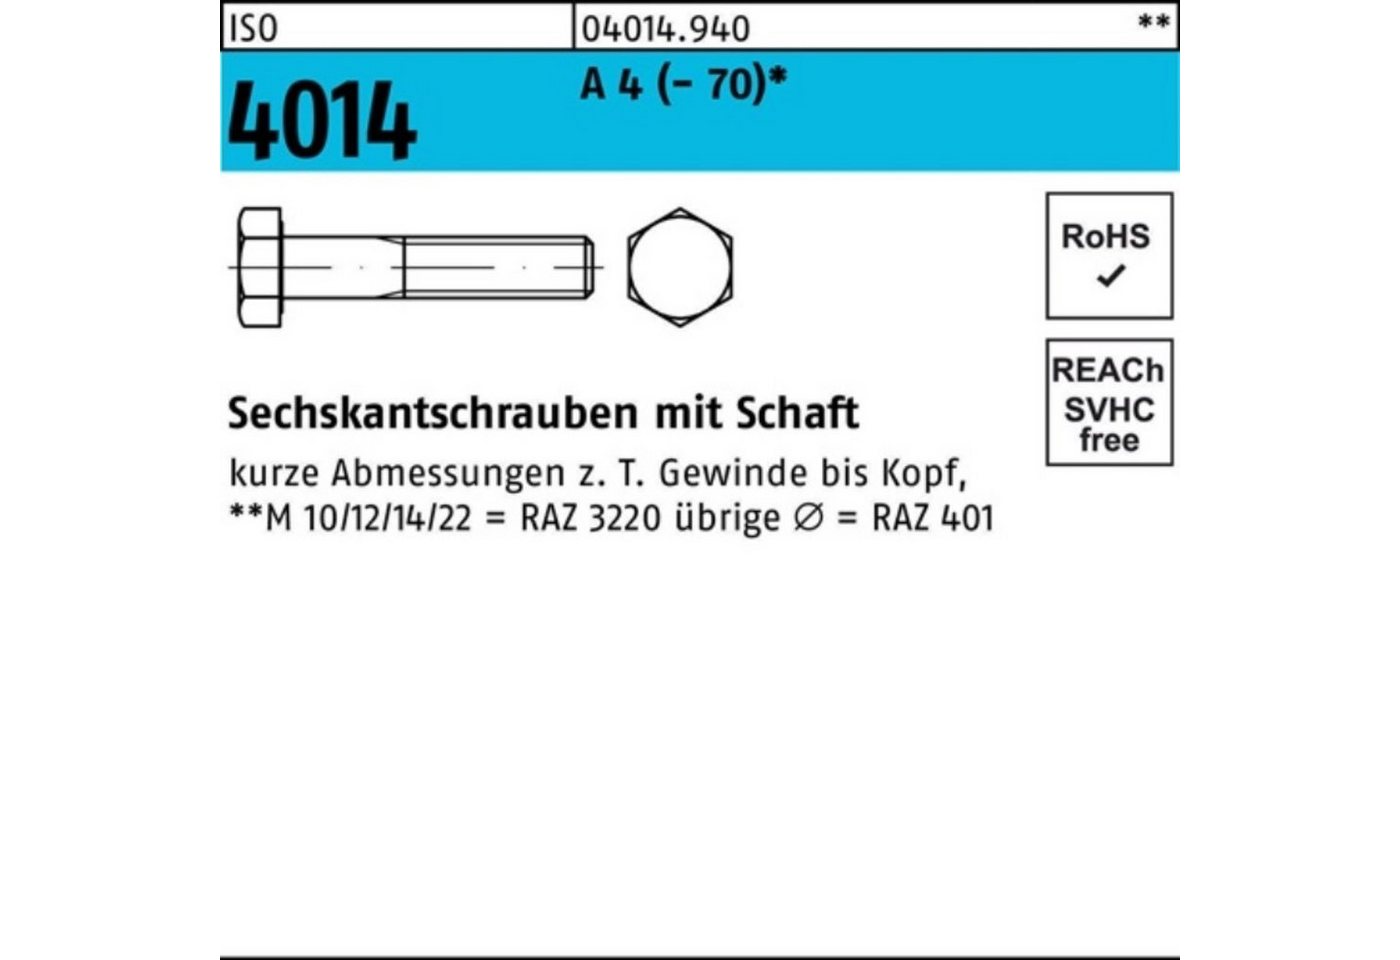 Bufab Sechskantschraube 100er Pack Sechskantschraube ISO 4014 Schaft M20x 80 A 4 (70) 1 Stü von Bufab